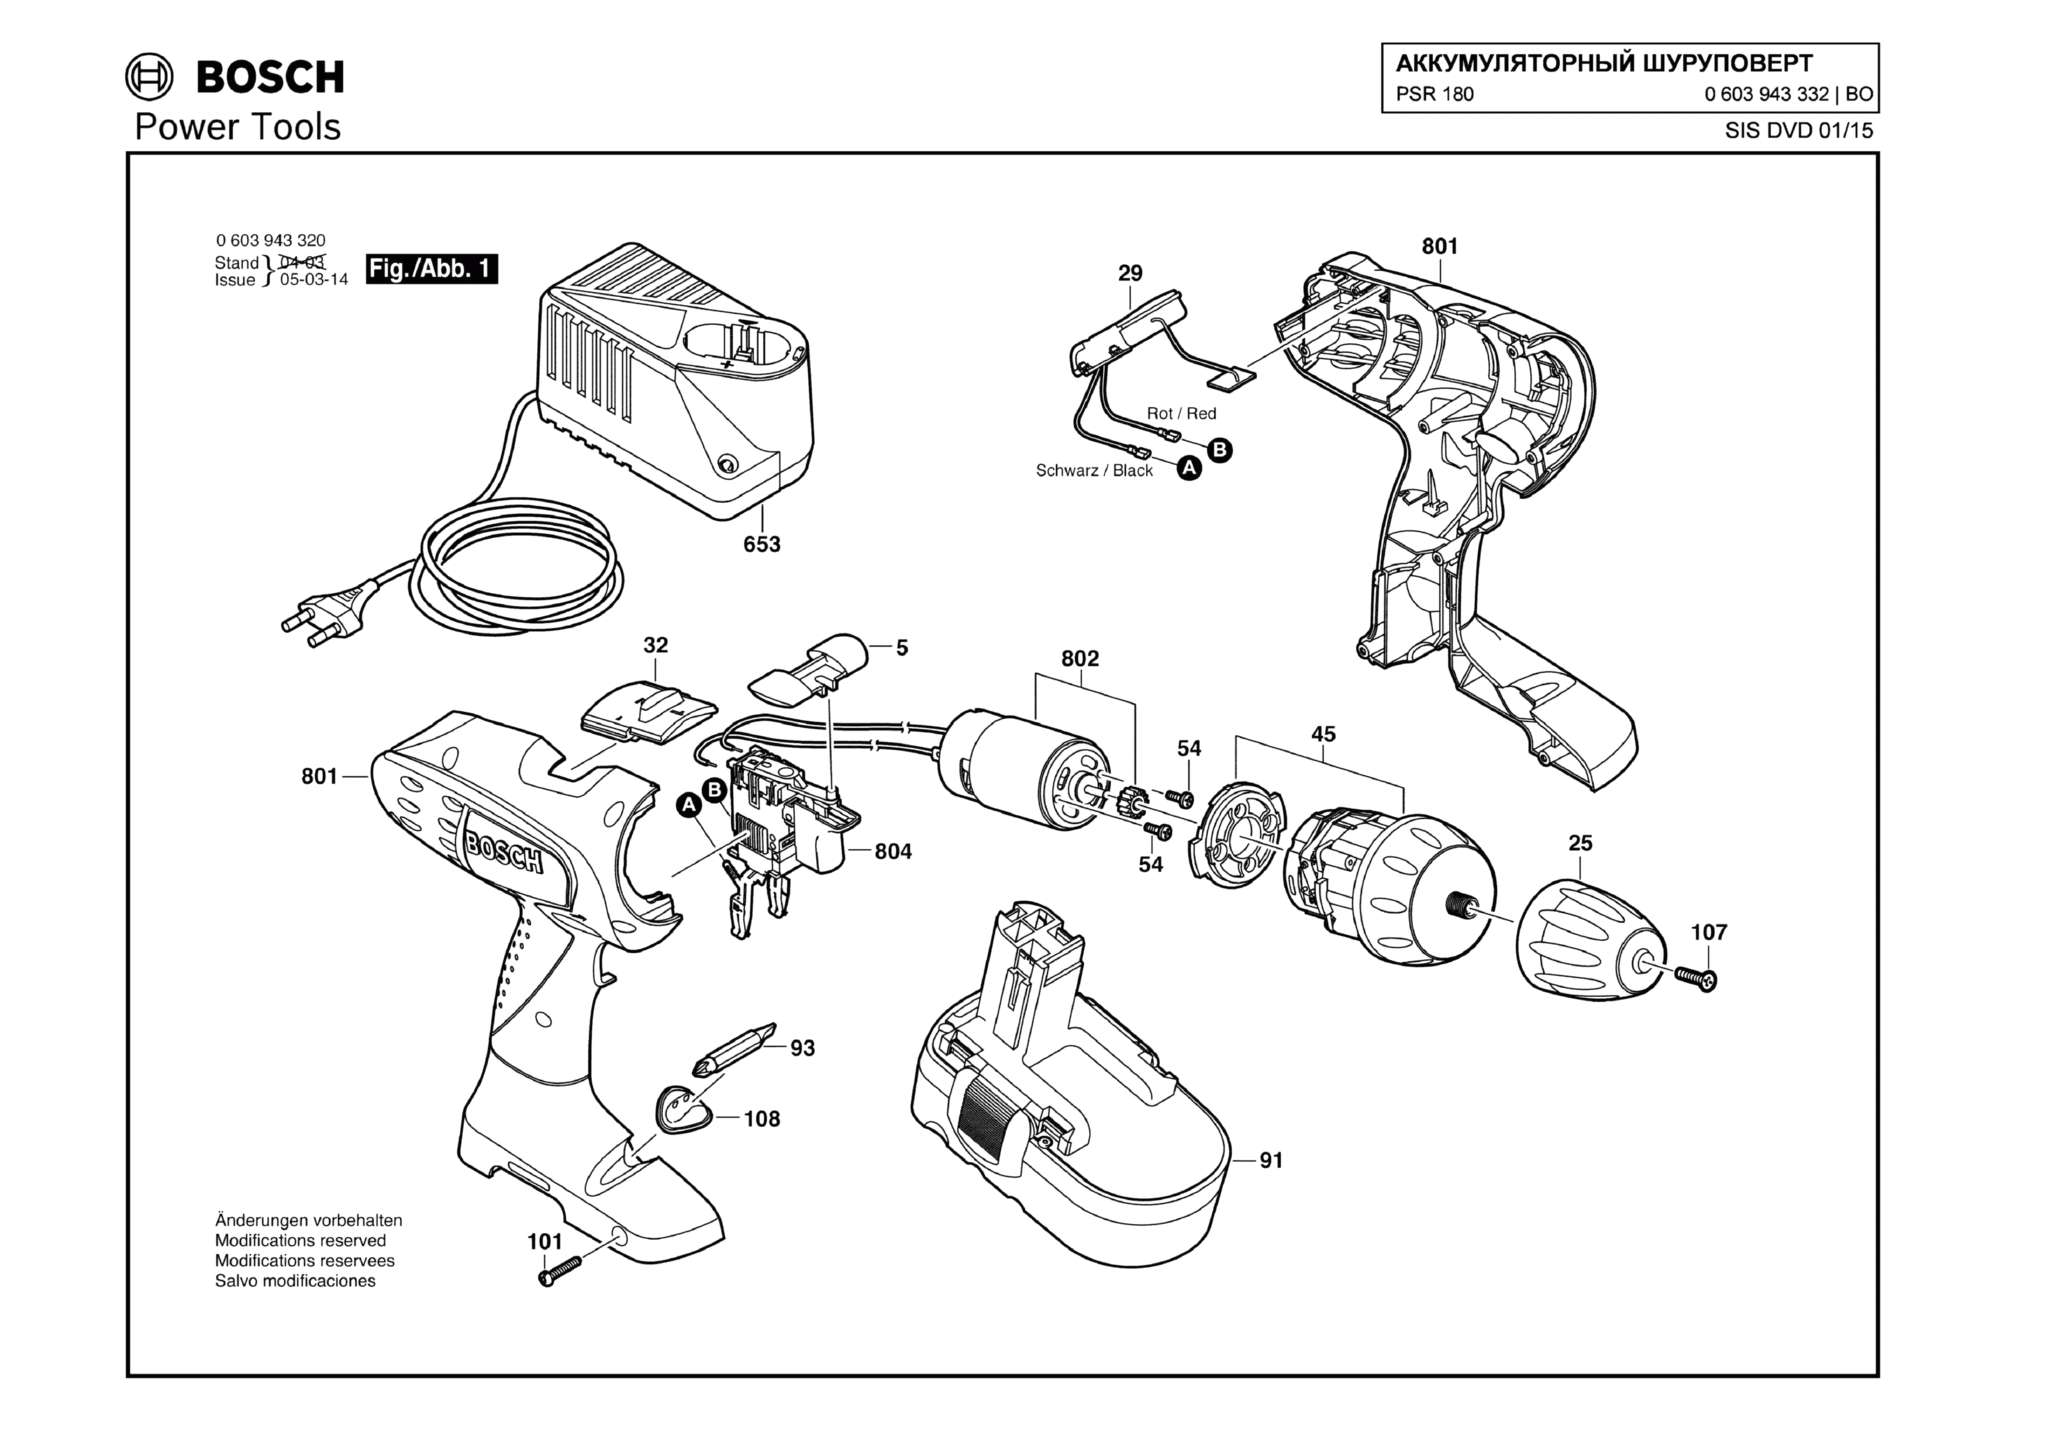 Запчасти, схема и деталировка Bosch PSR 180 (ТИП 0603943332)